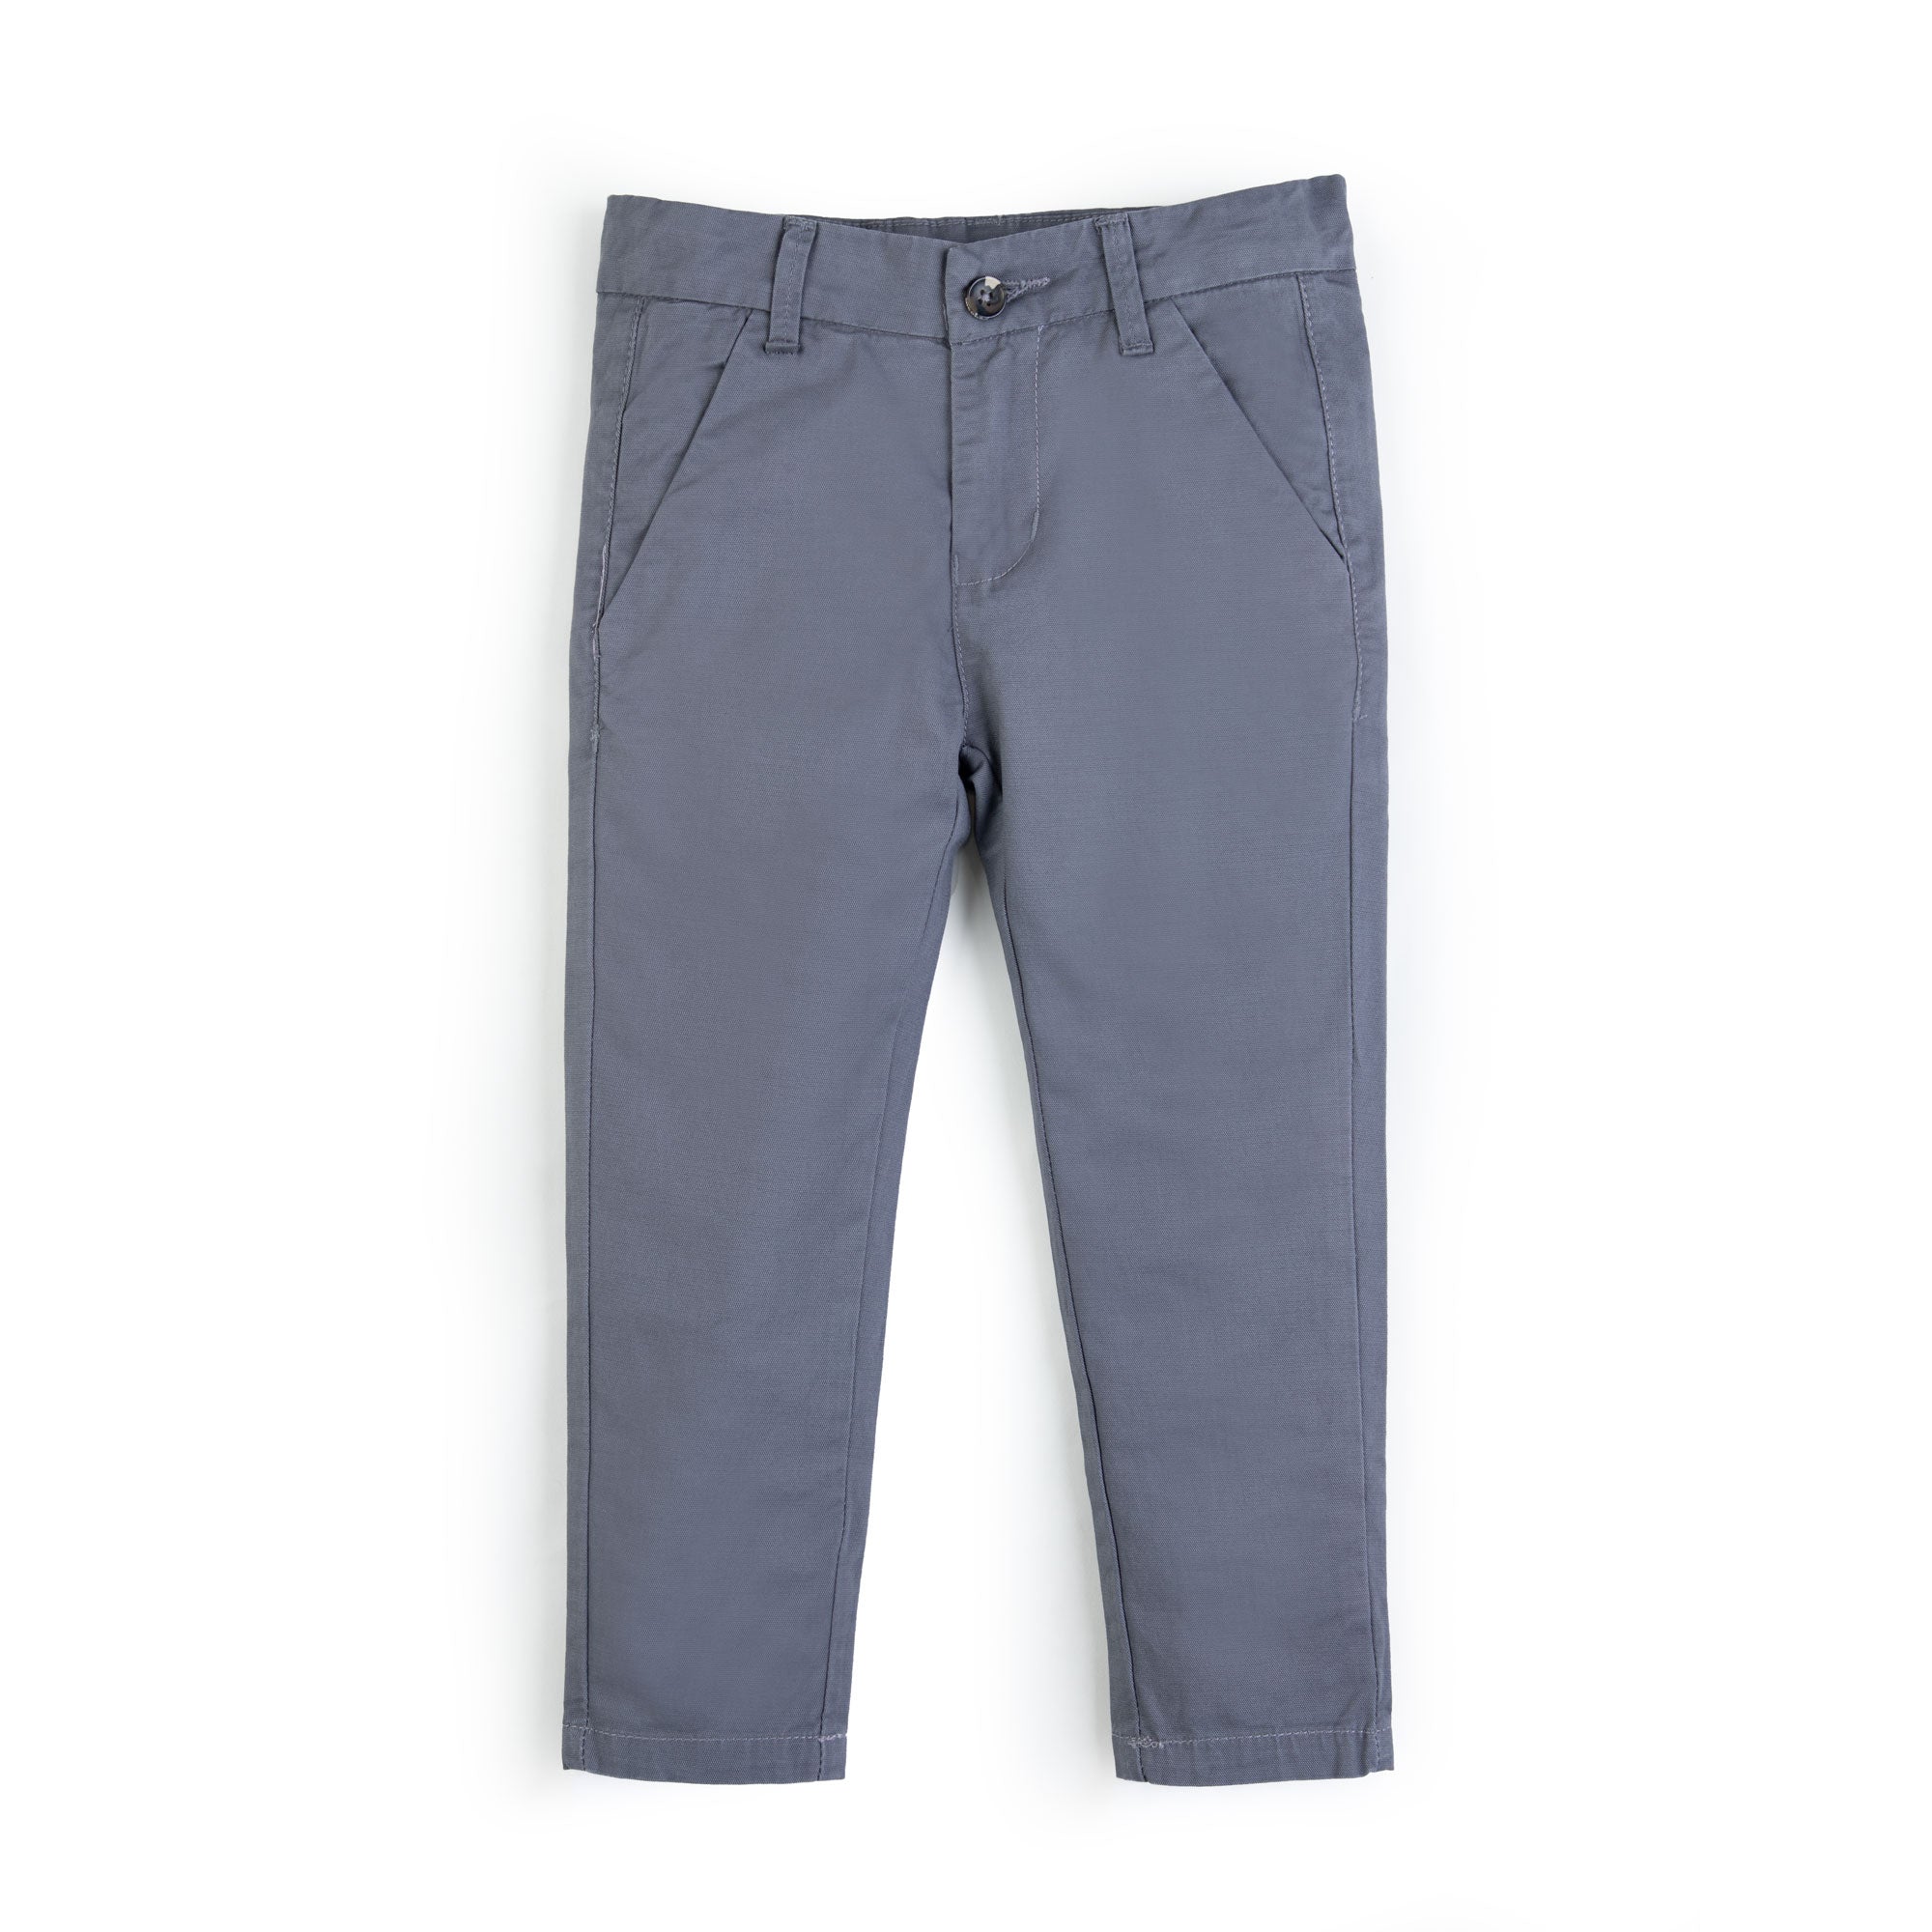 Grey cotton pant